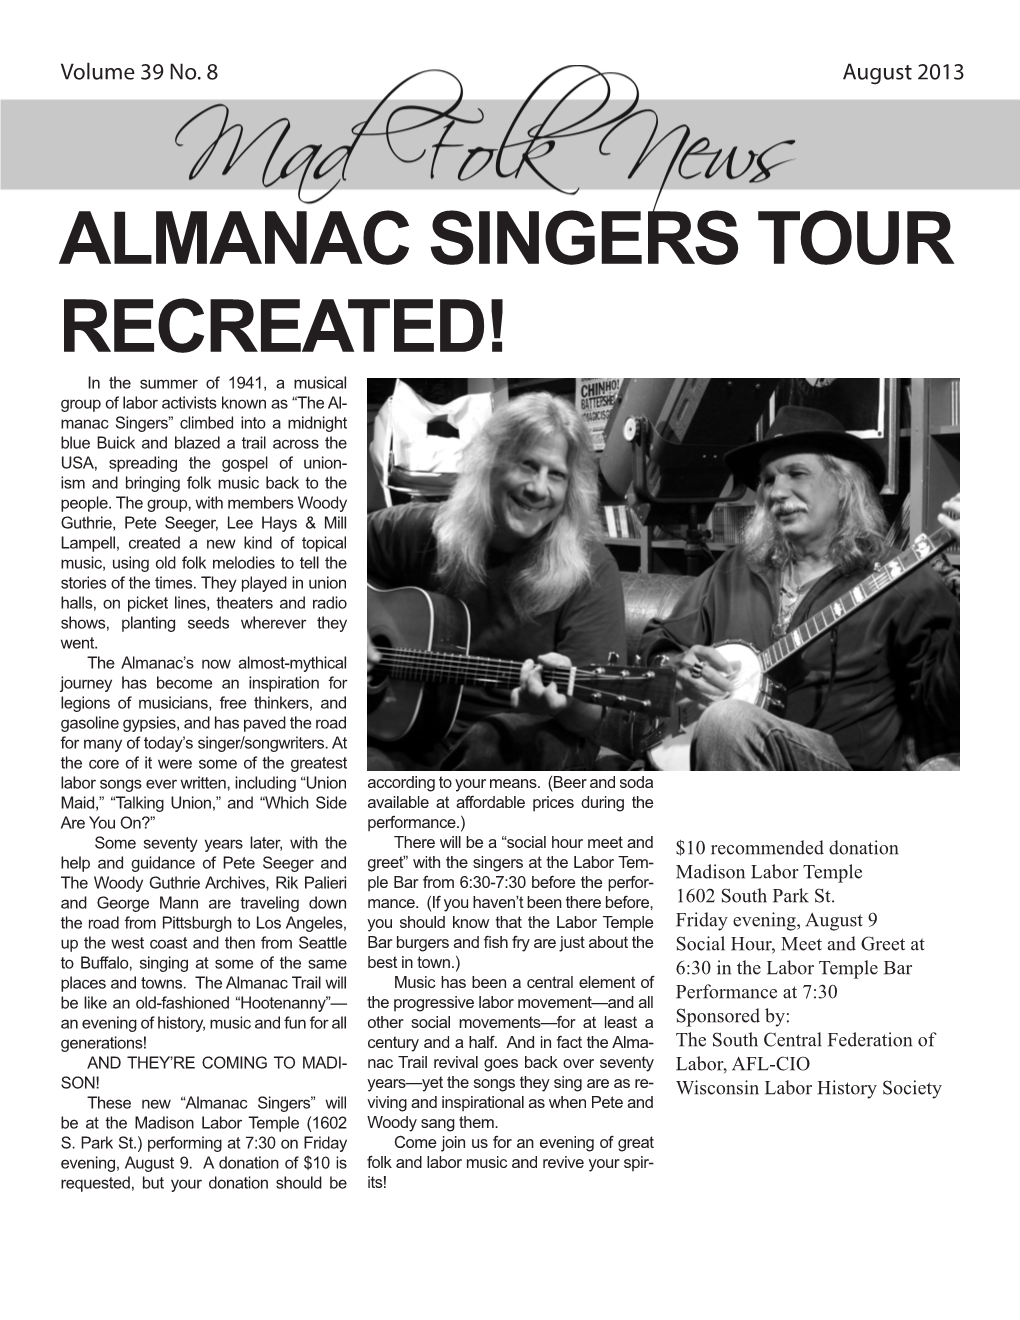 Almanac Singers Tour Recreated!